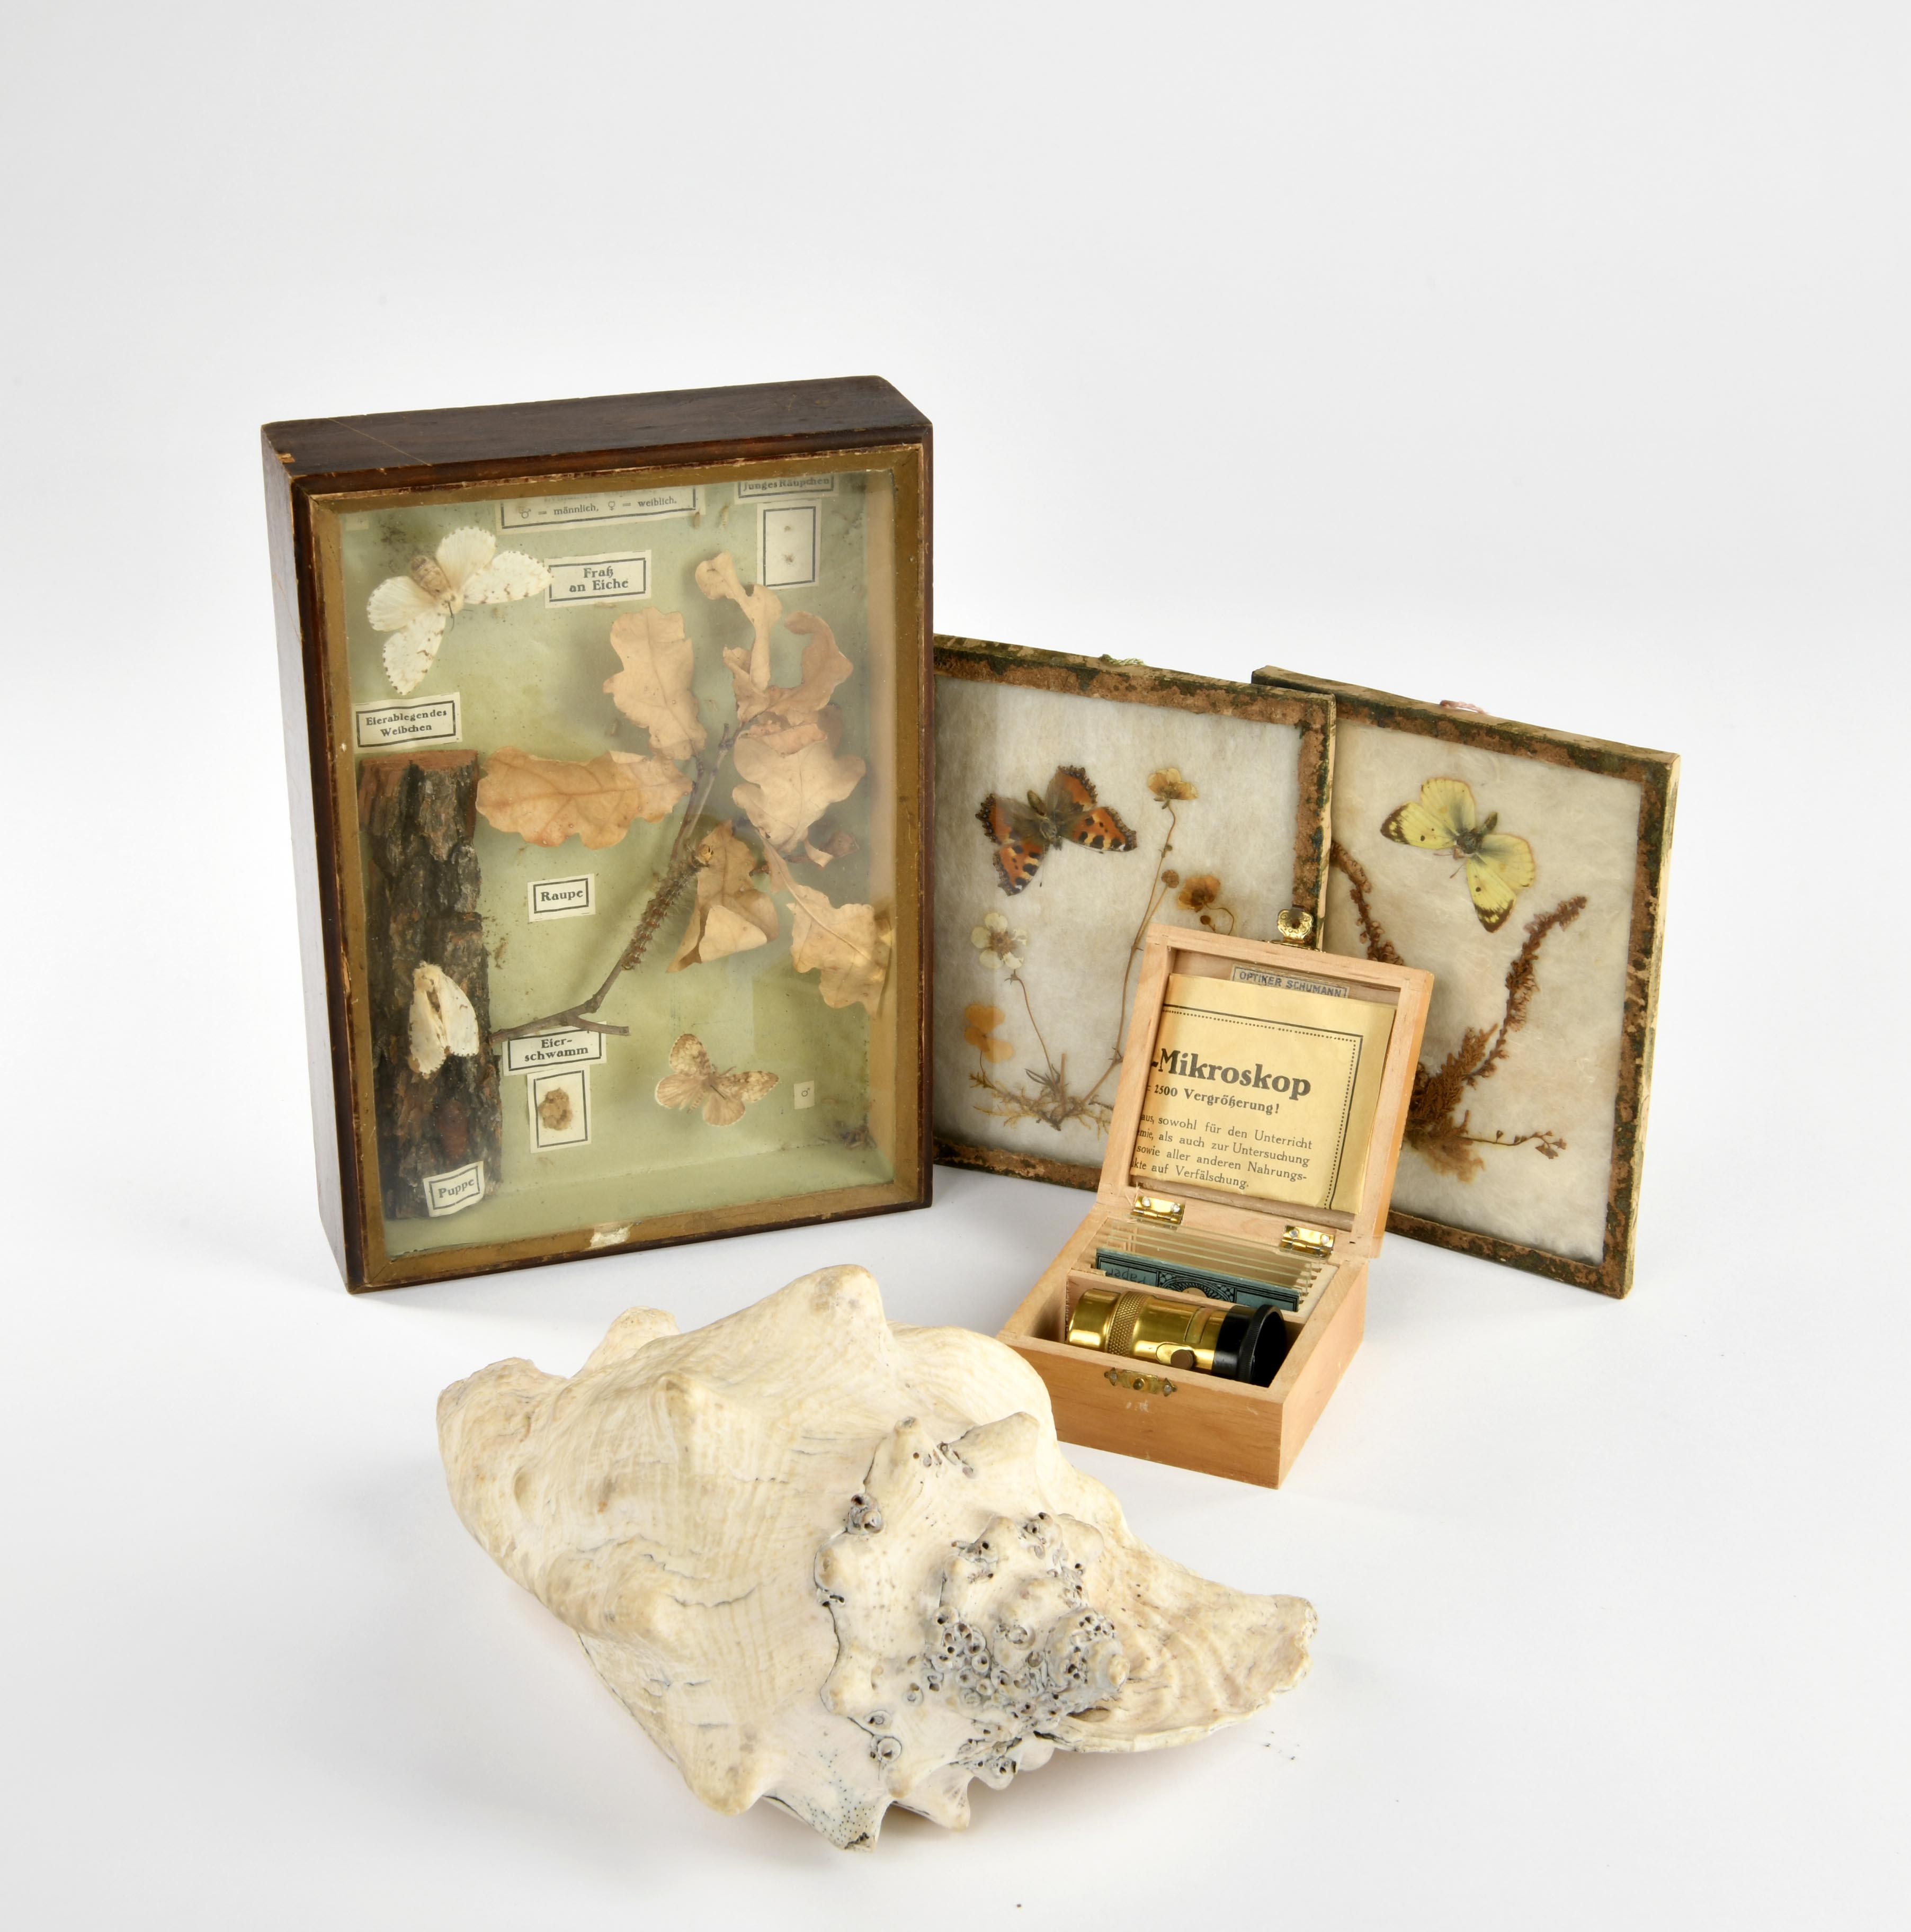 2 butterfly specimens, sea shell, small stand microscope + Kosmo showcase (Optiker Schumann "